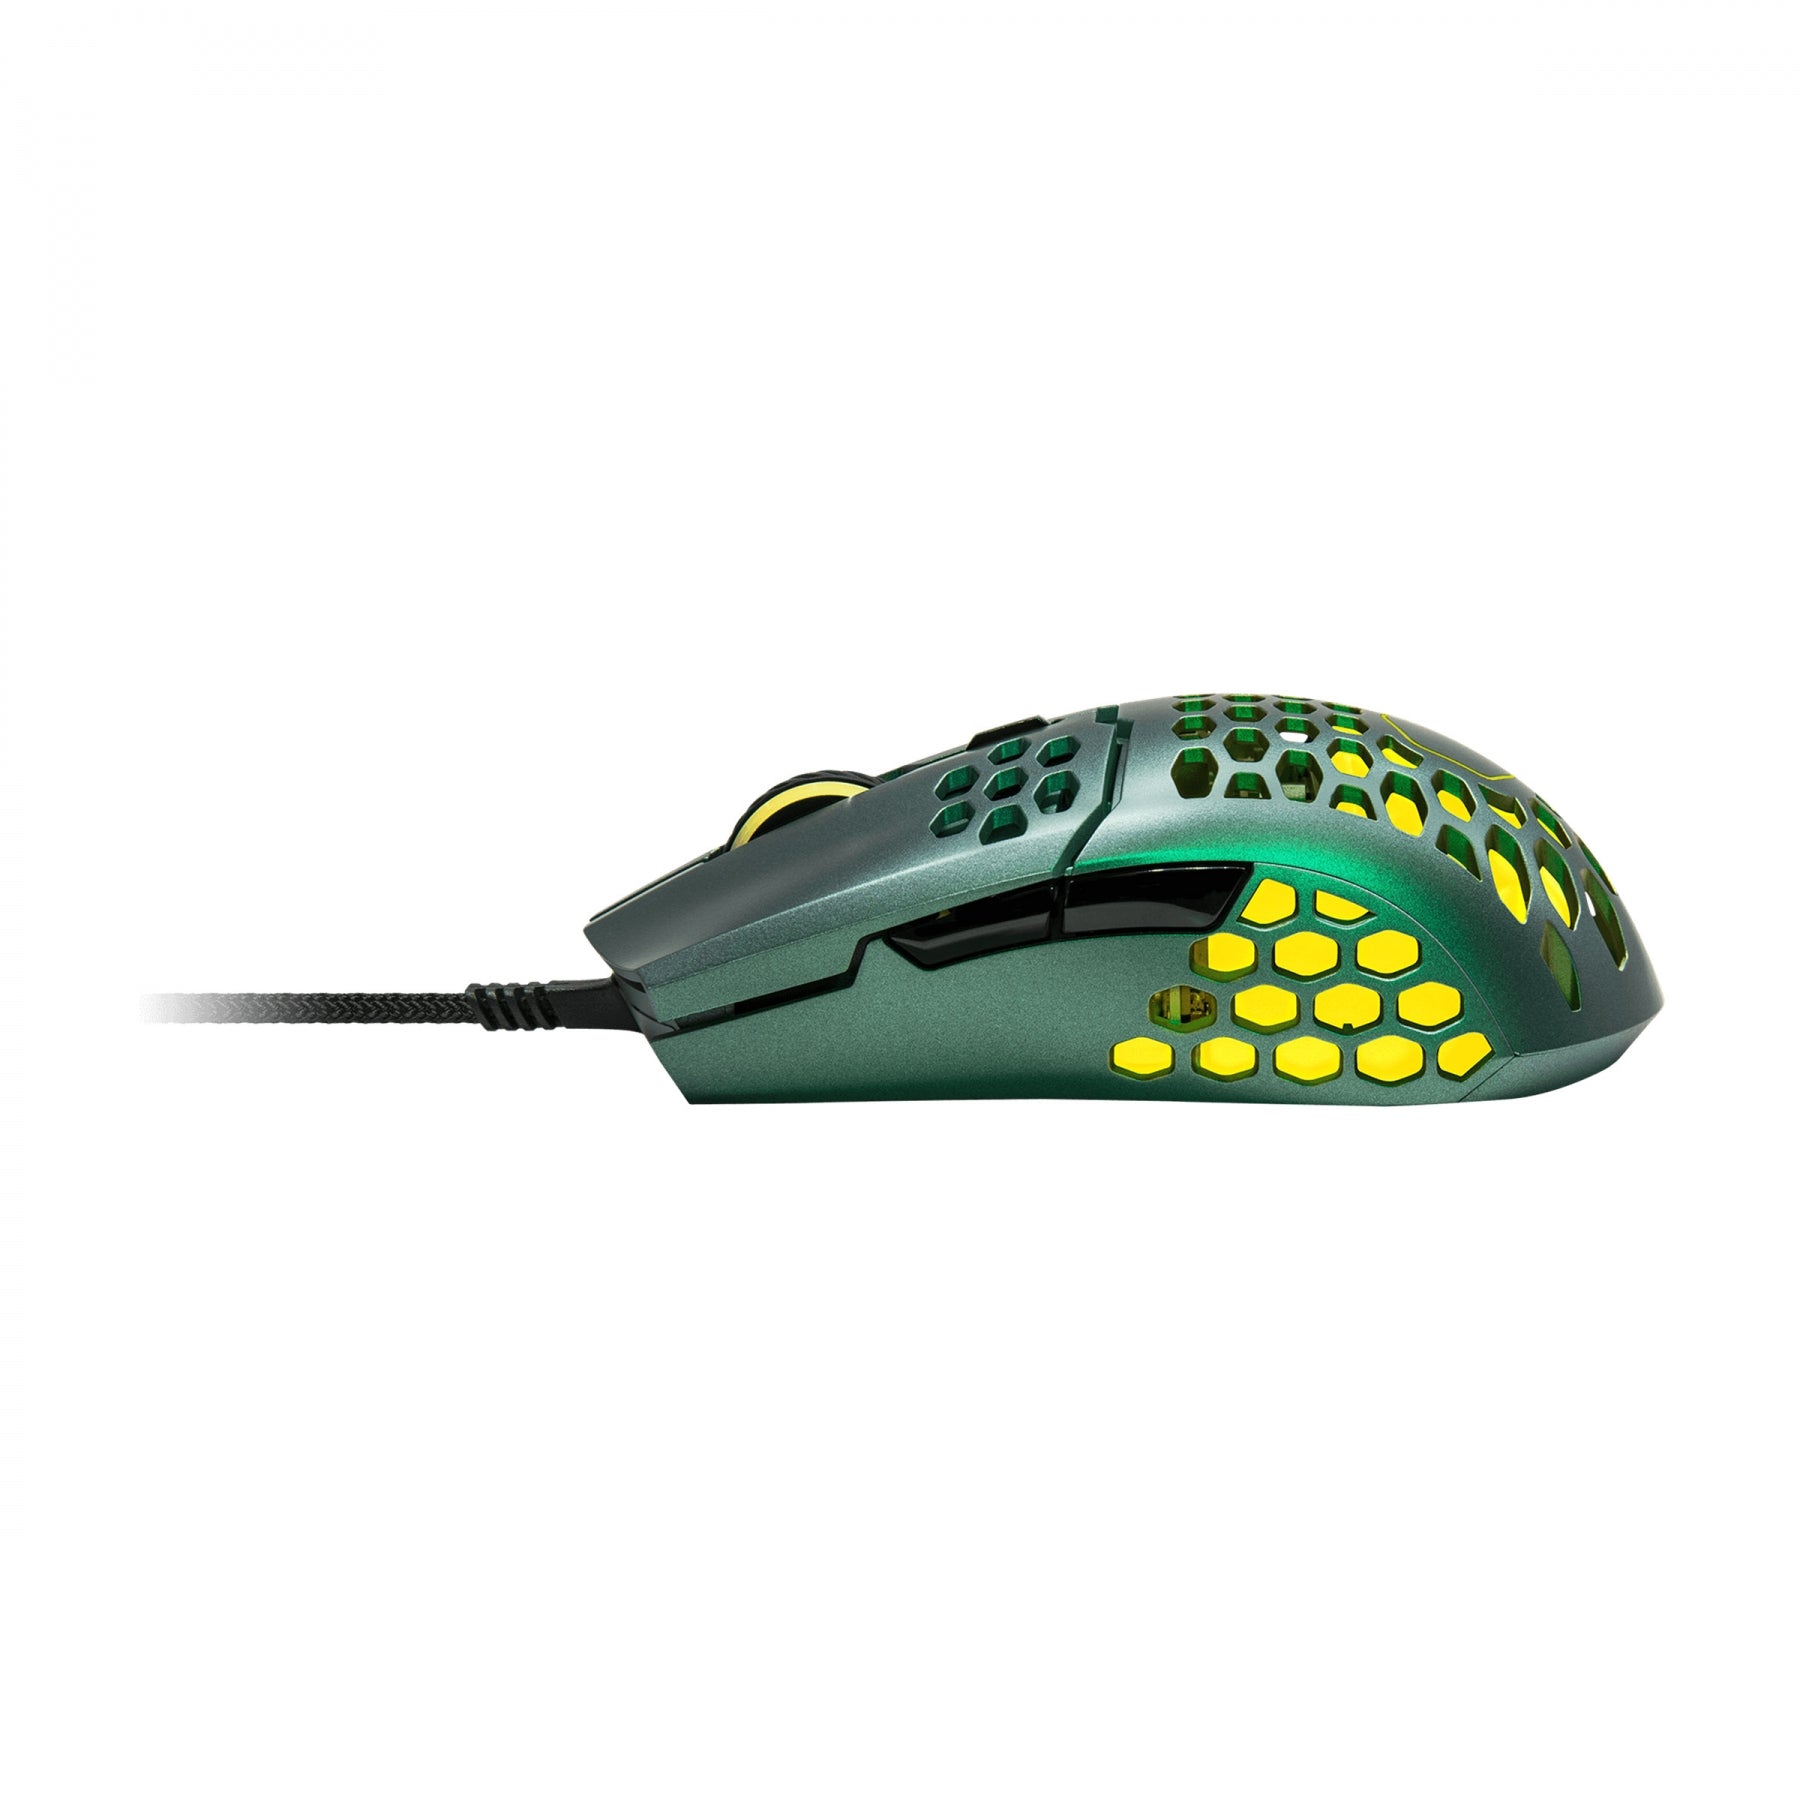 Cooler Master MM711 Olive Green Lightweight Gaming Mouse W/ Honeycomb Shell MKVITUMX2V |33407|